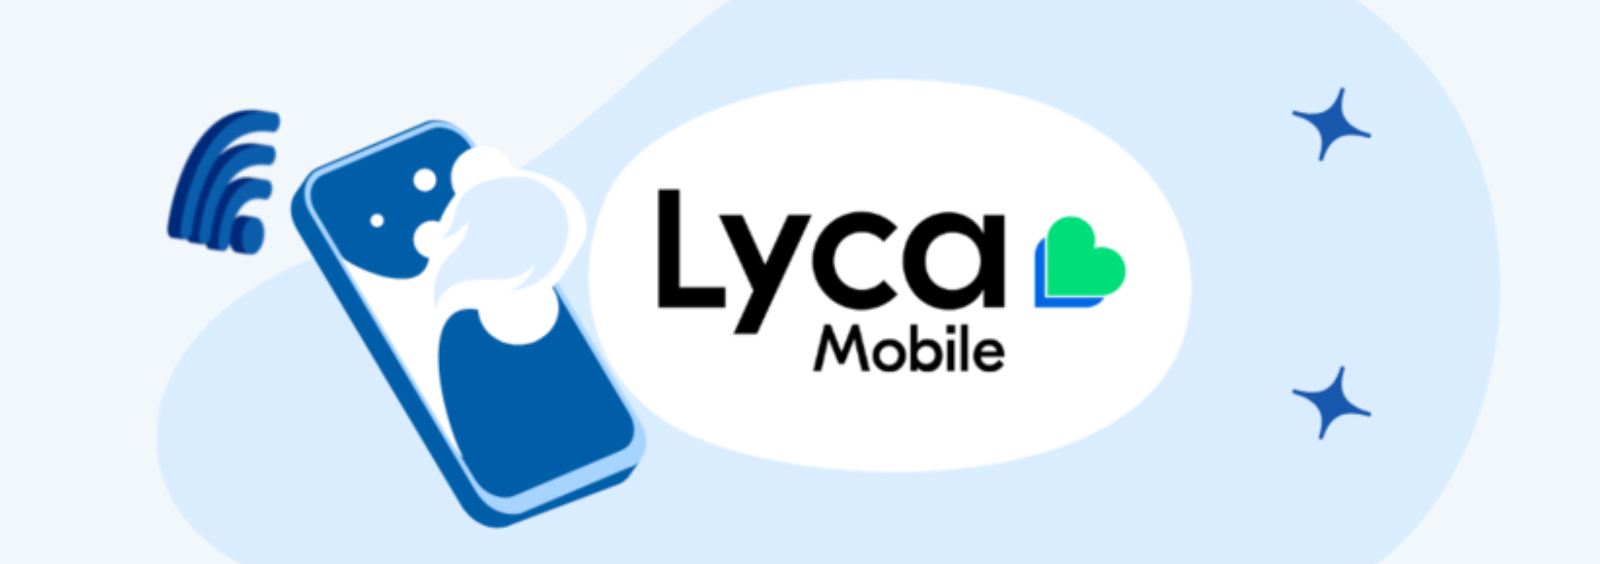 LycaMobile logo